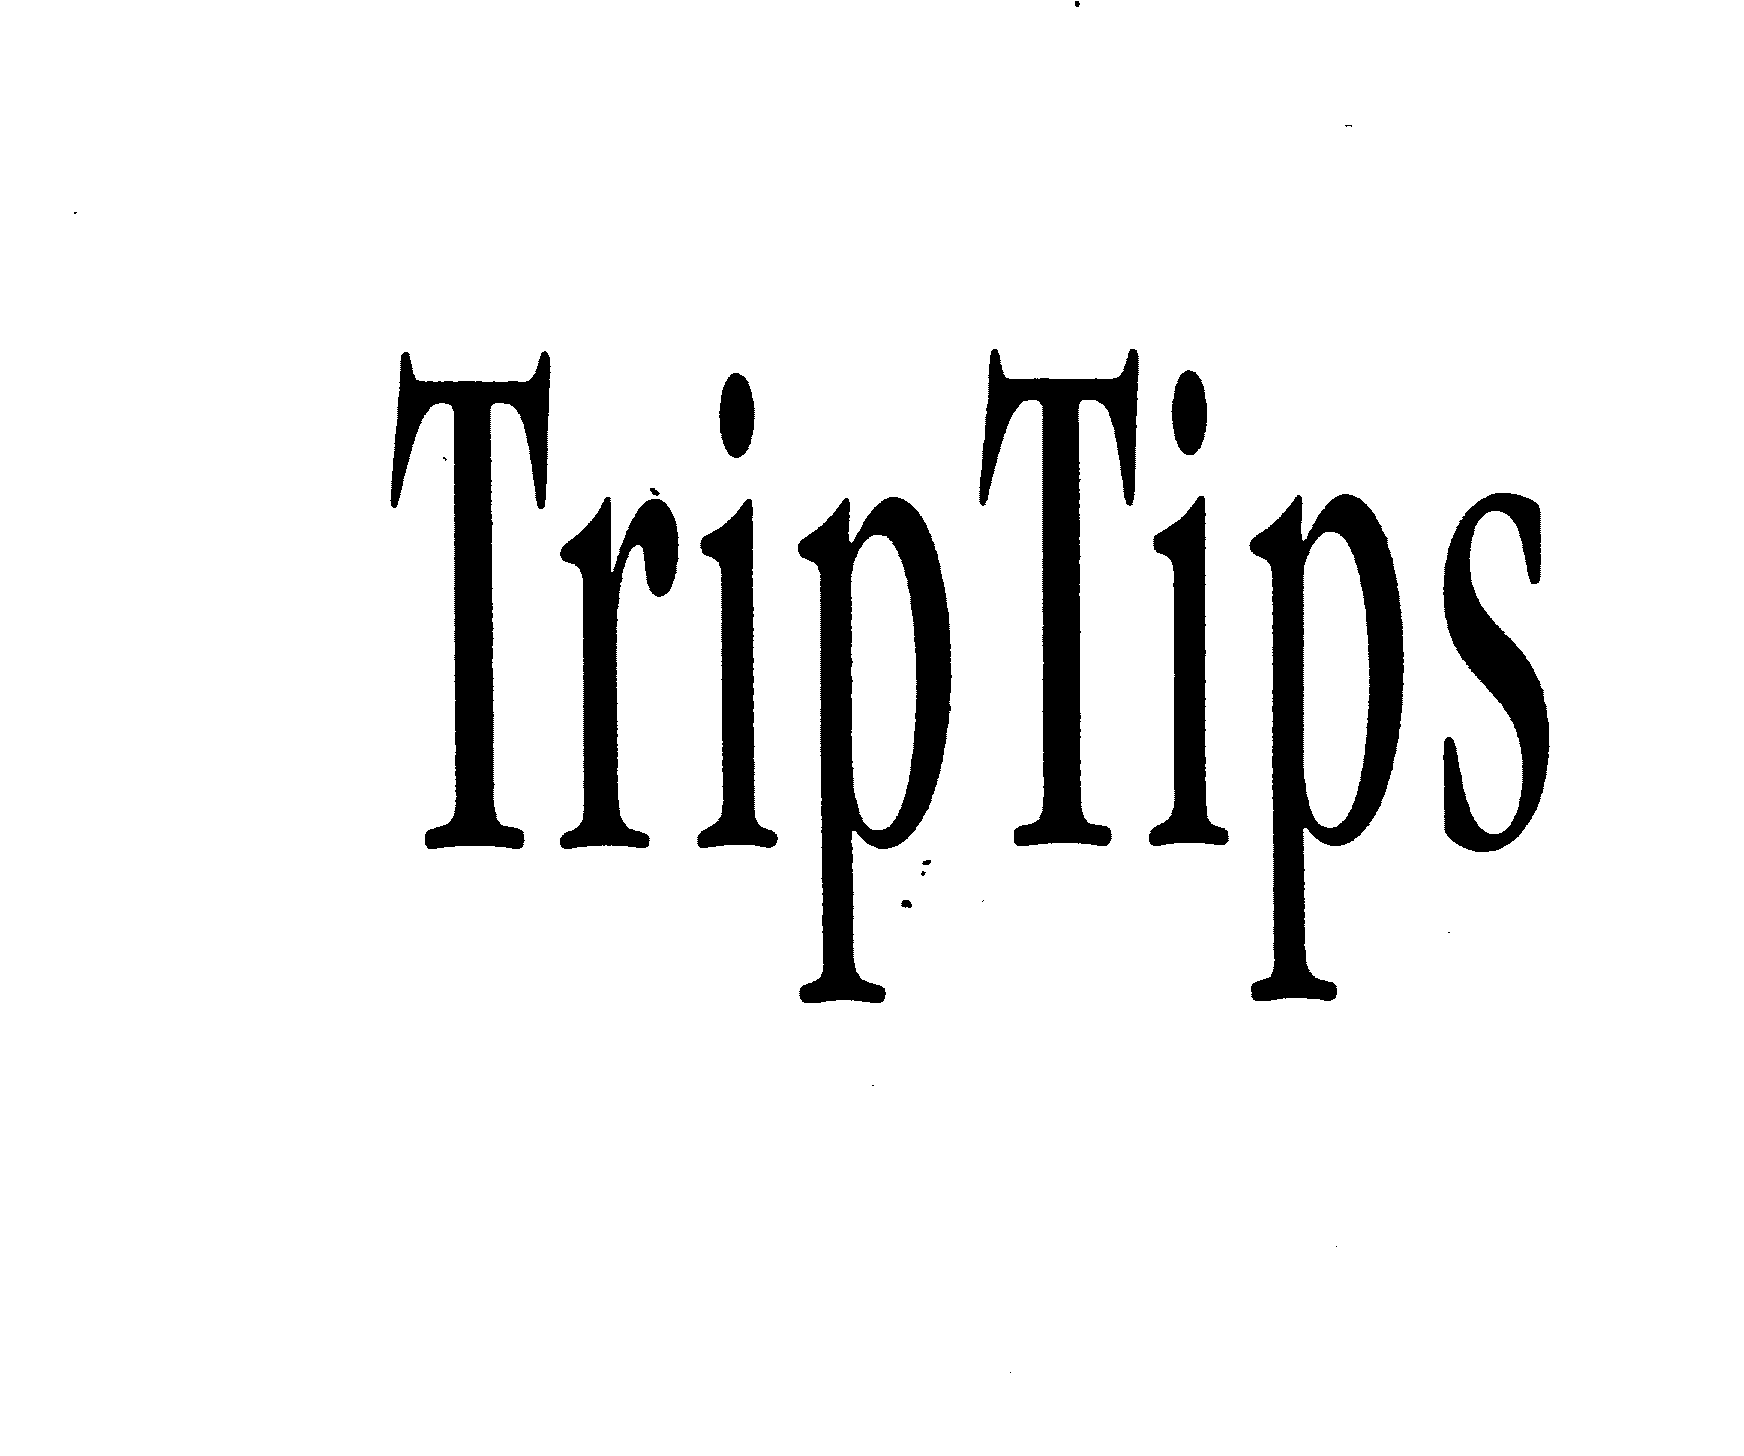 TRIPTIPS